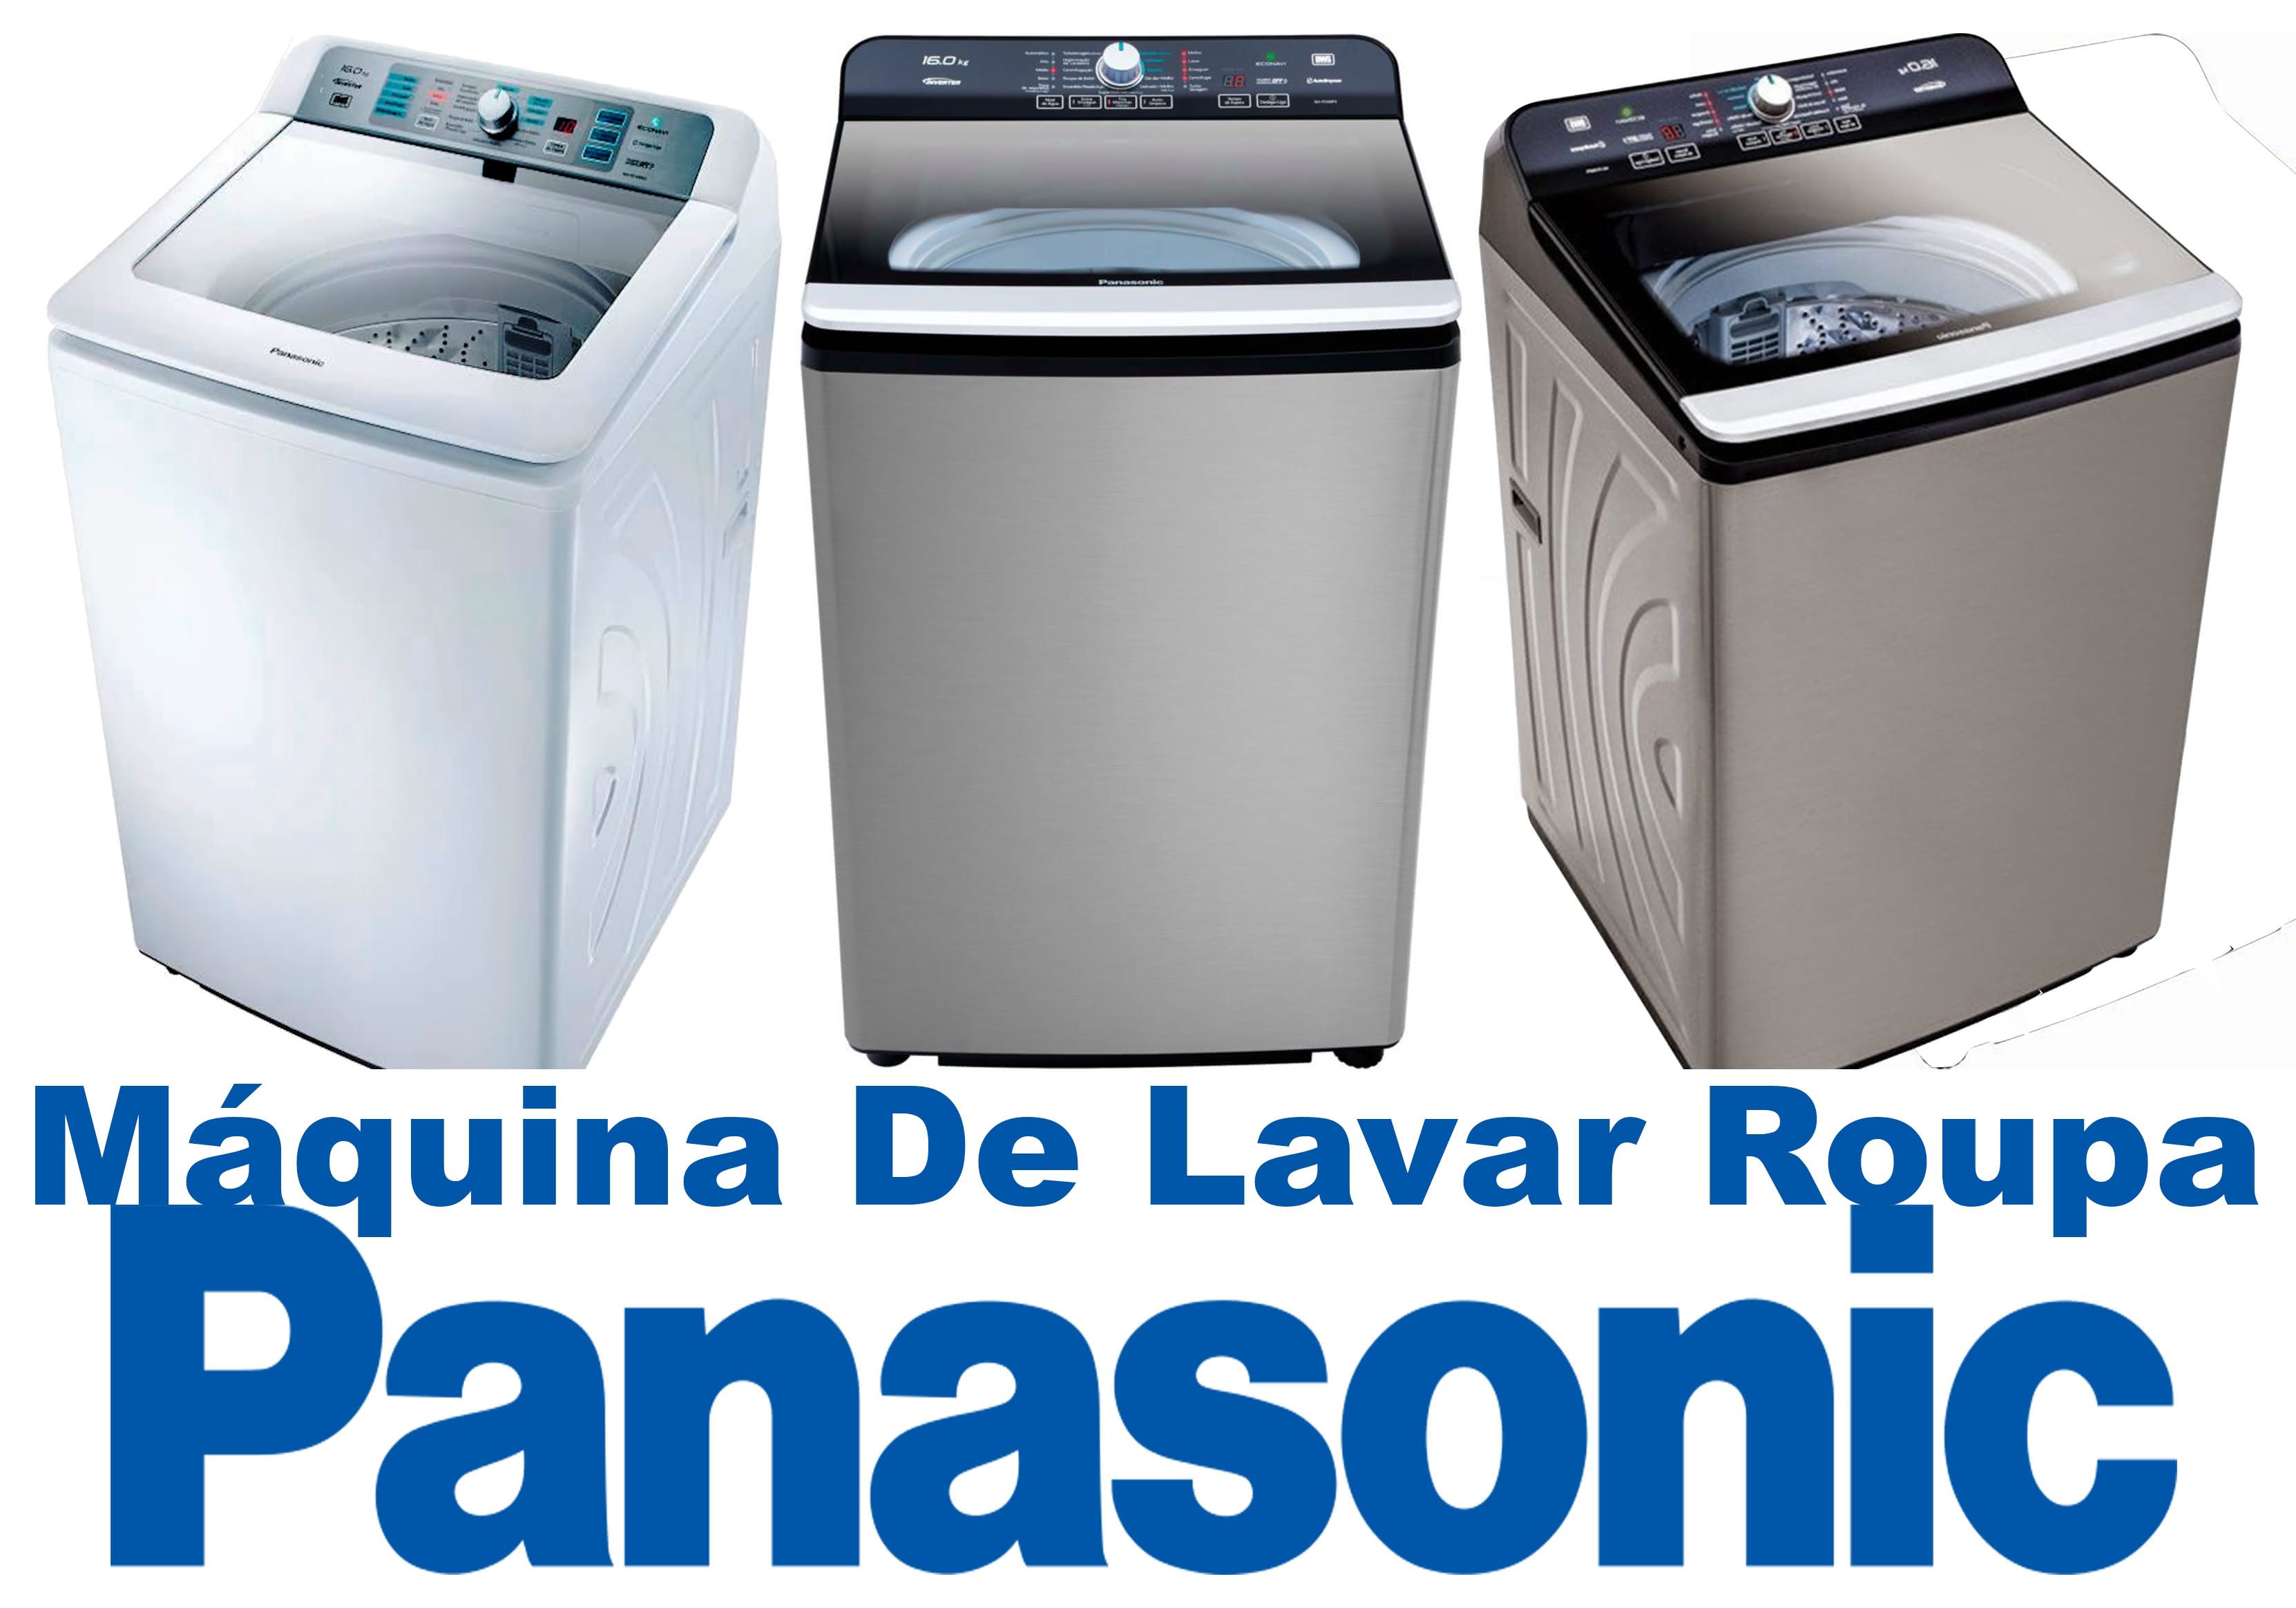 Máquina Lavar Panasonic é ótima! Online